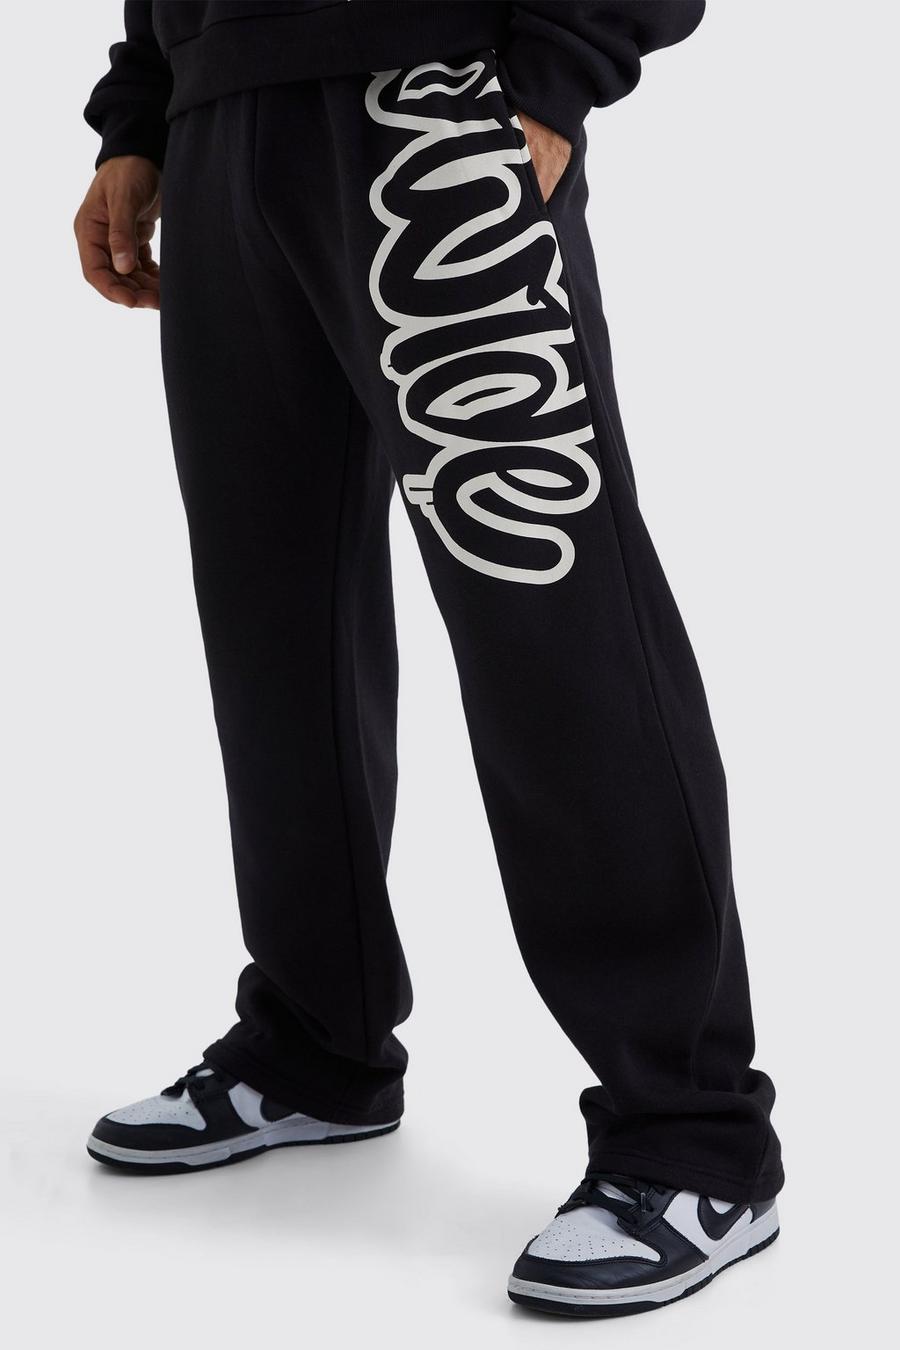 Pantalón deportivo holgado con estampado Worldwide de grafiti, Black